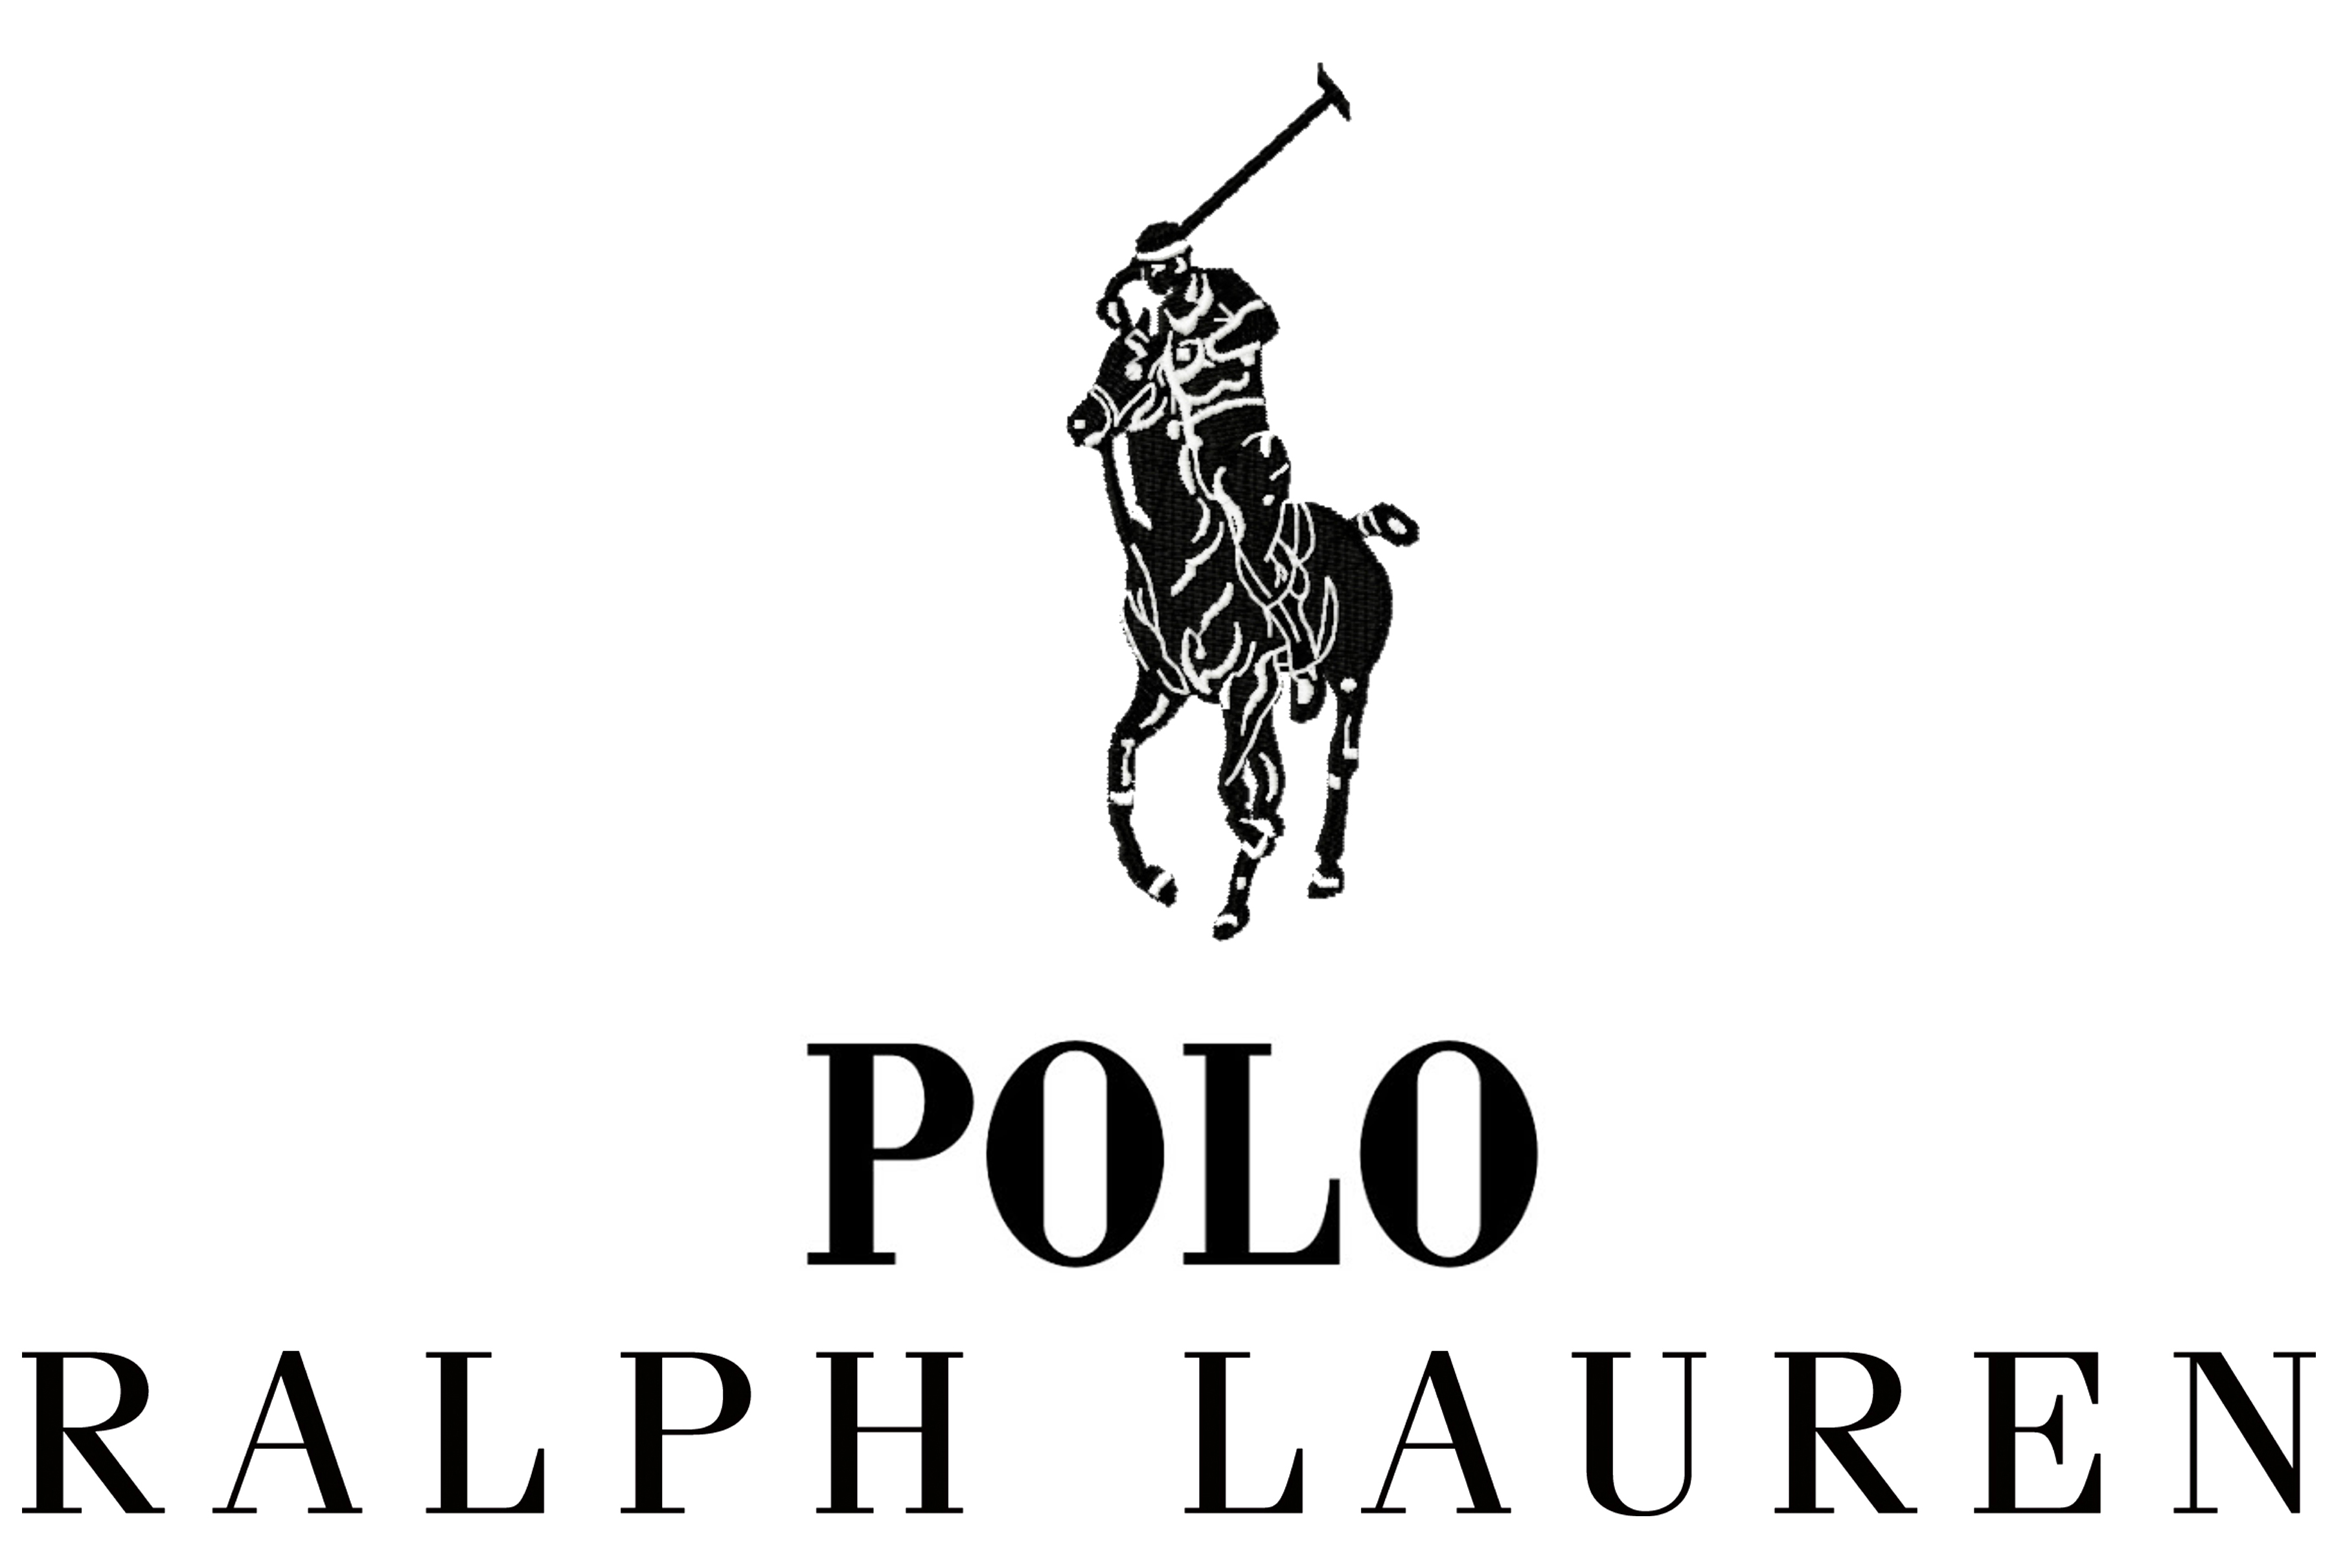 Polo Ralph Lauren Logo Pictures